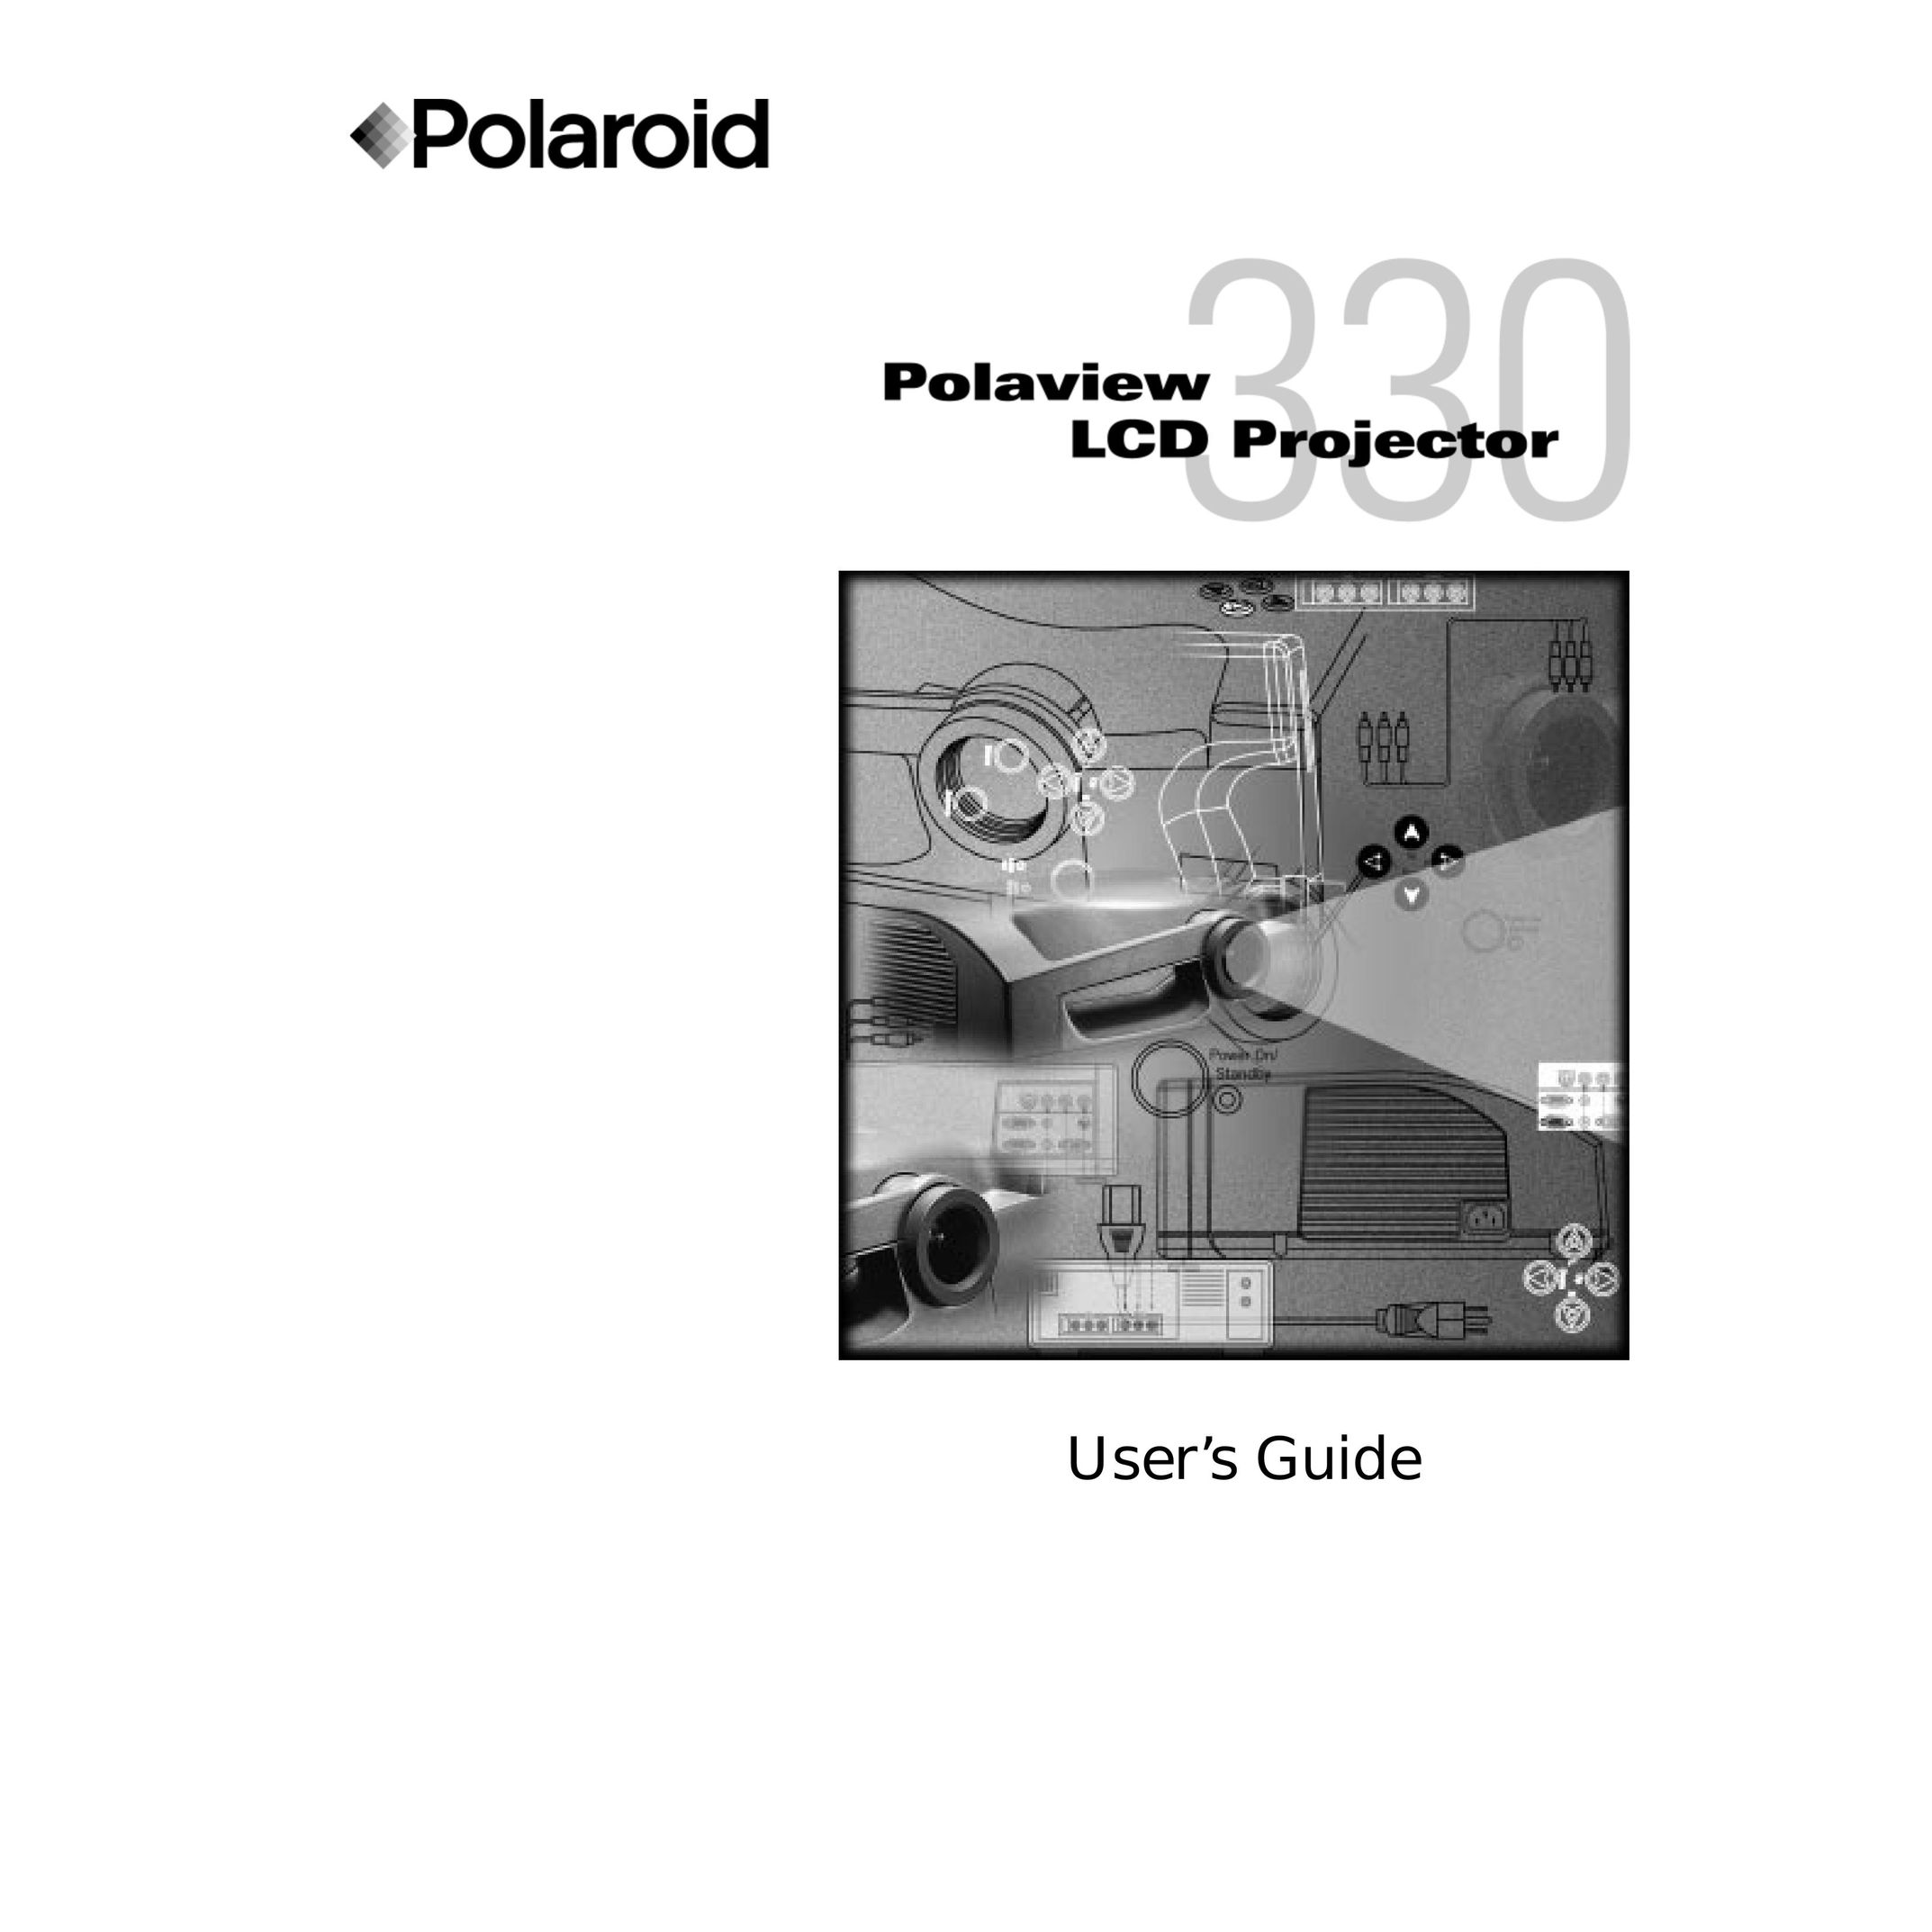 Polaroid PV330 Projector User Manual